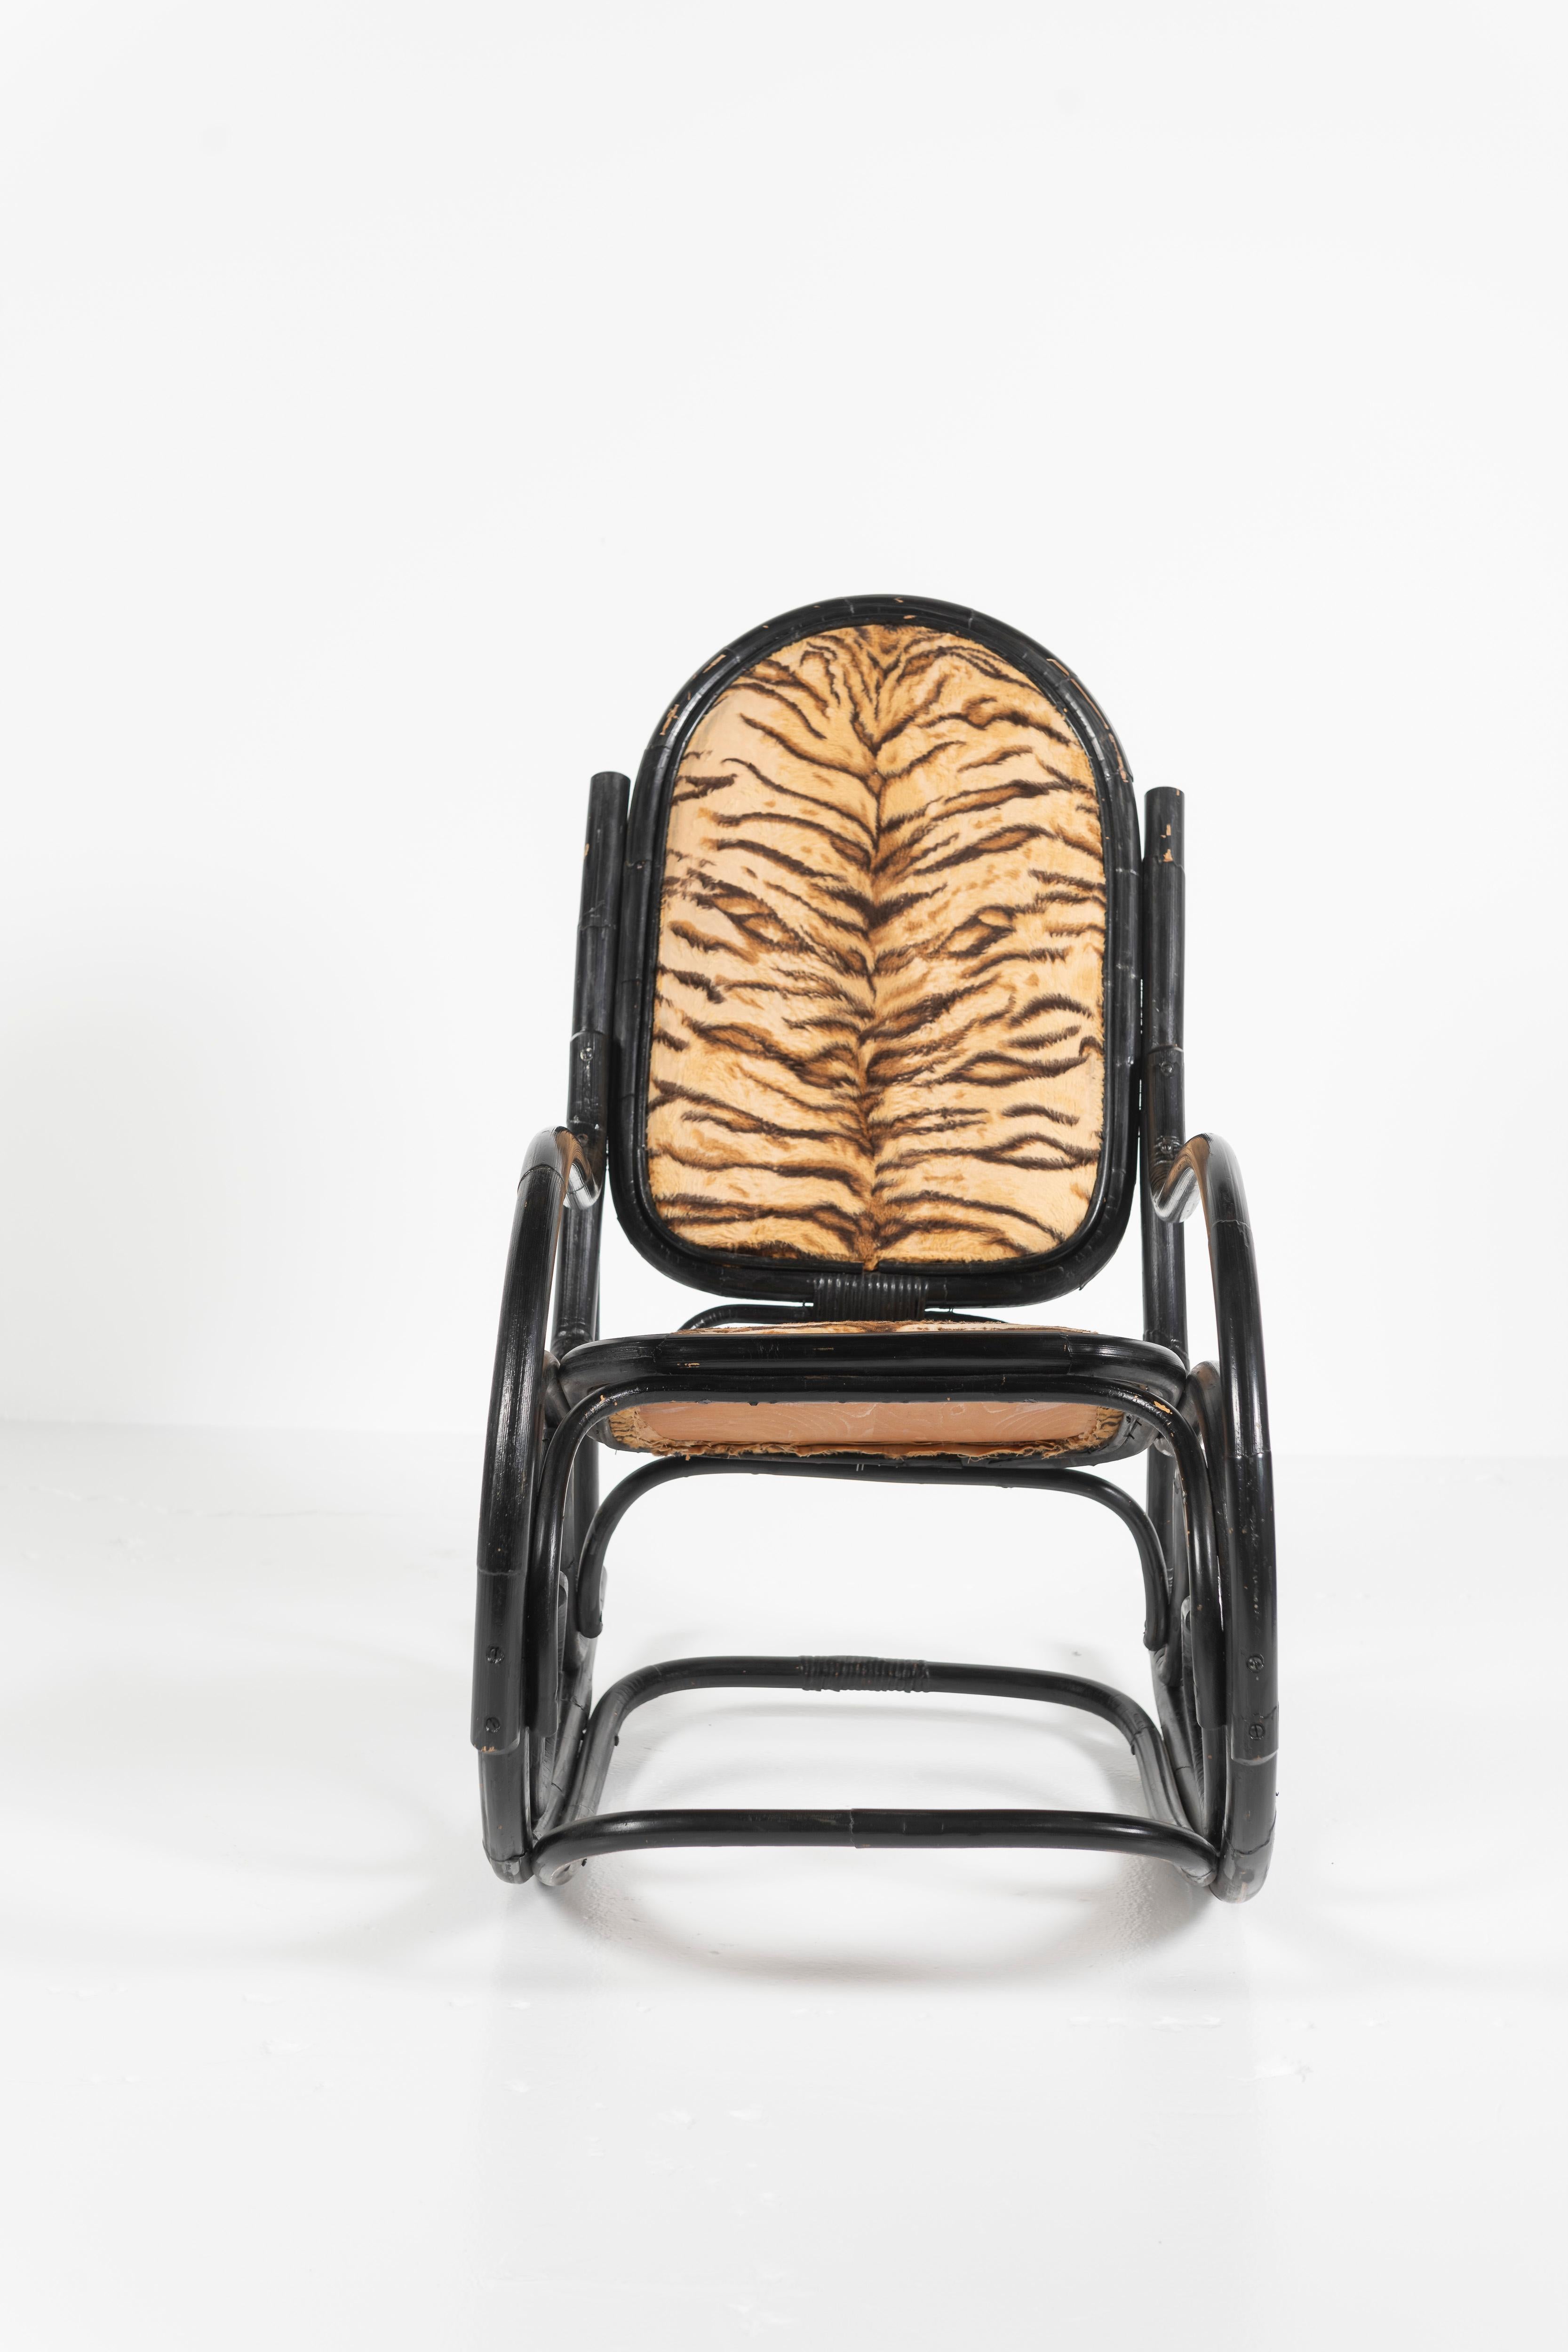 Victorian Vintage Ebonized Bamboo Rocking Chair, Thonet, Circa 1920 For Sale